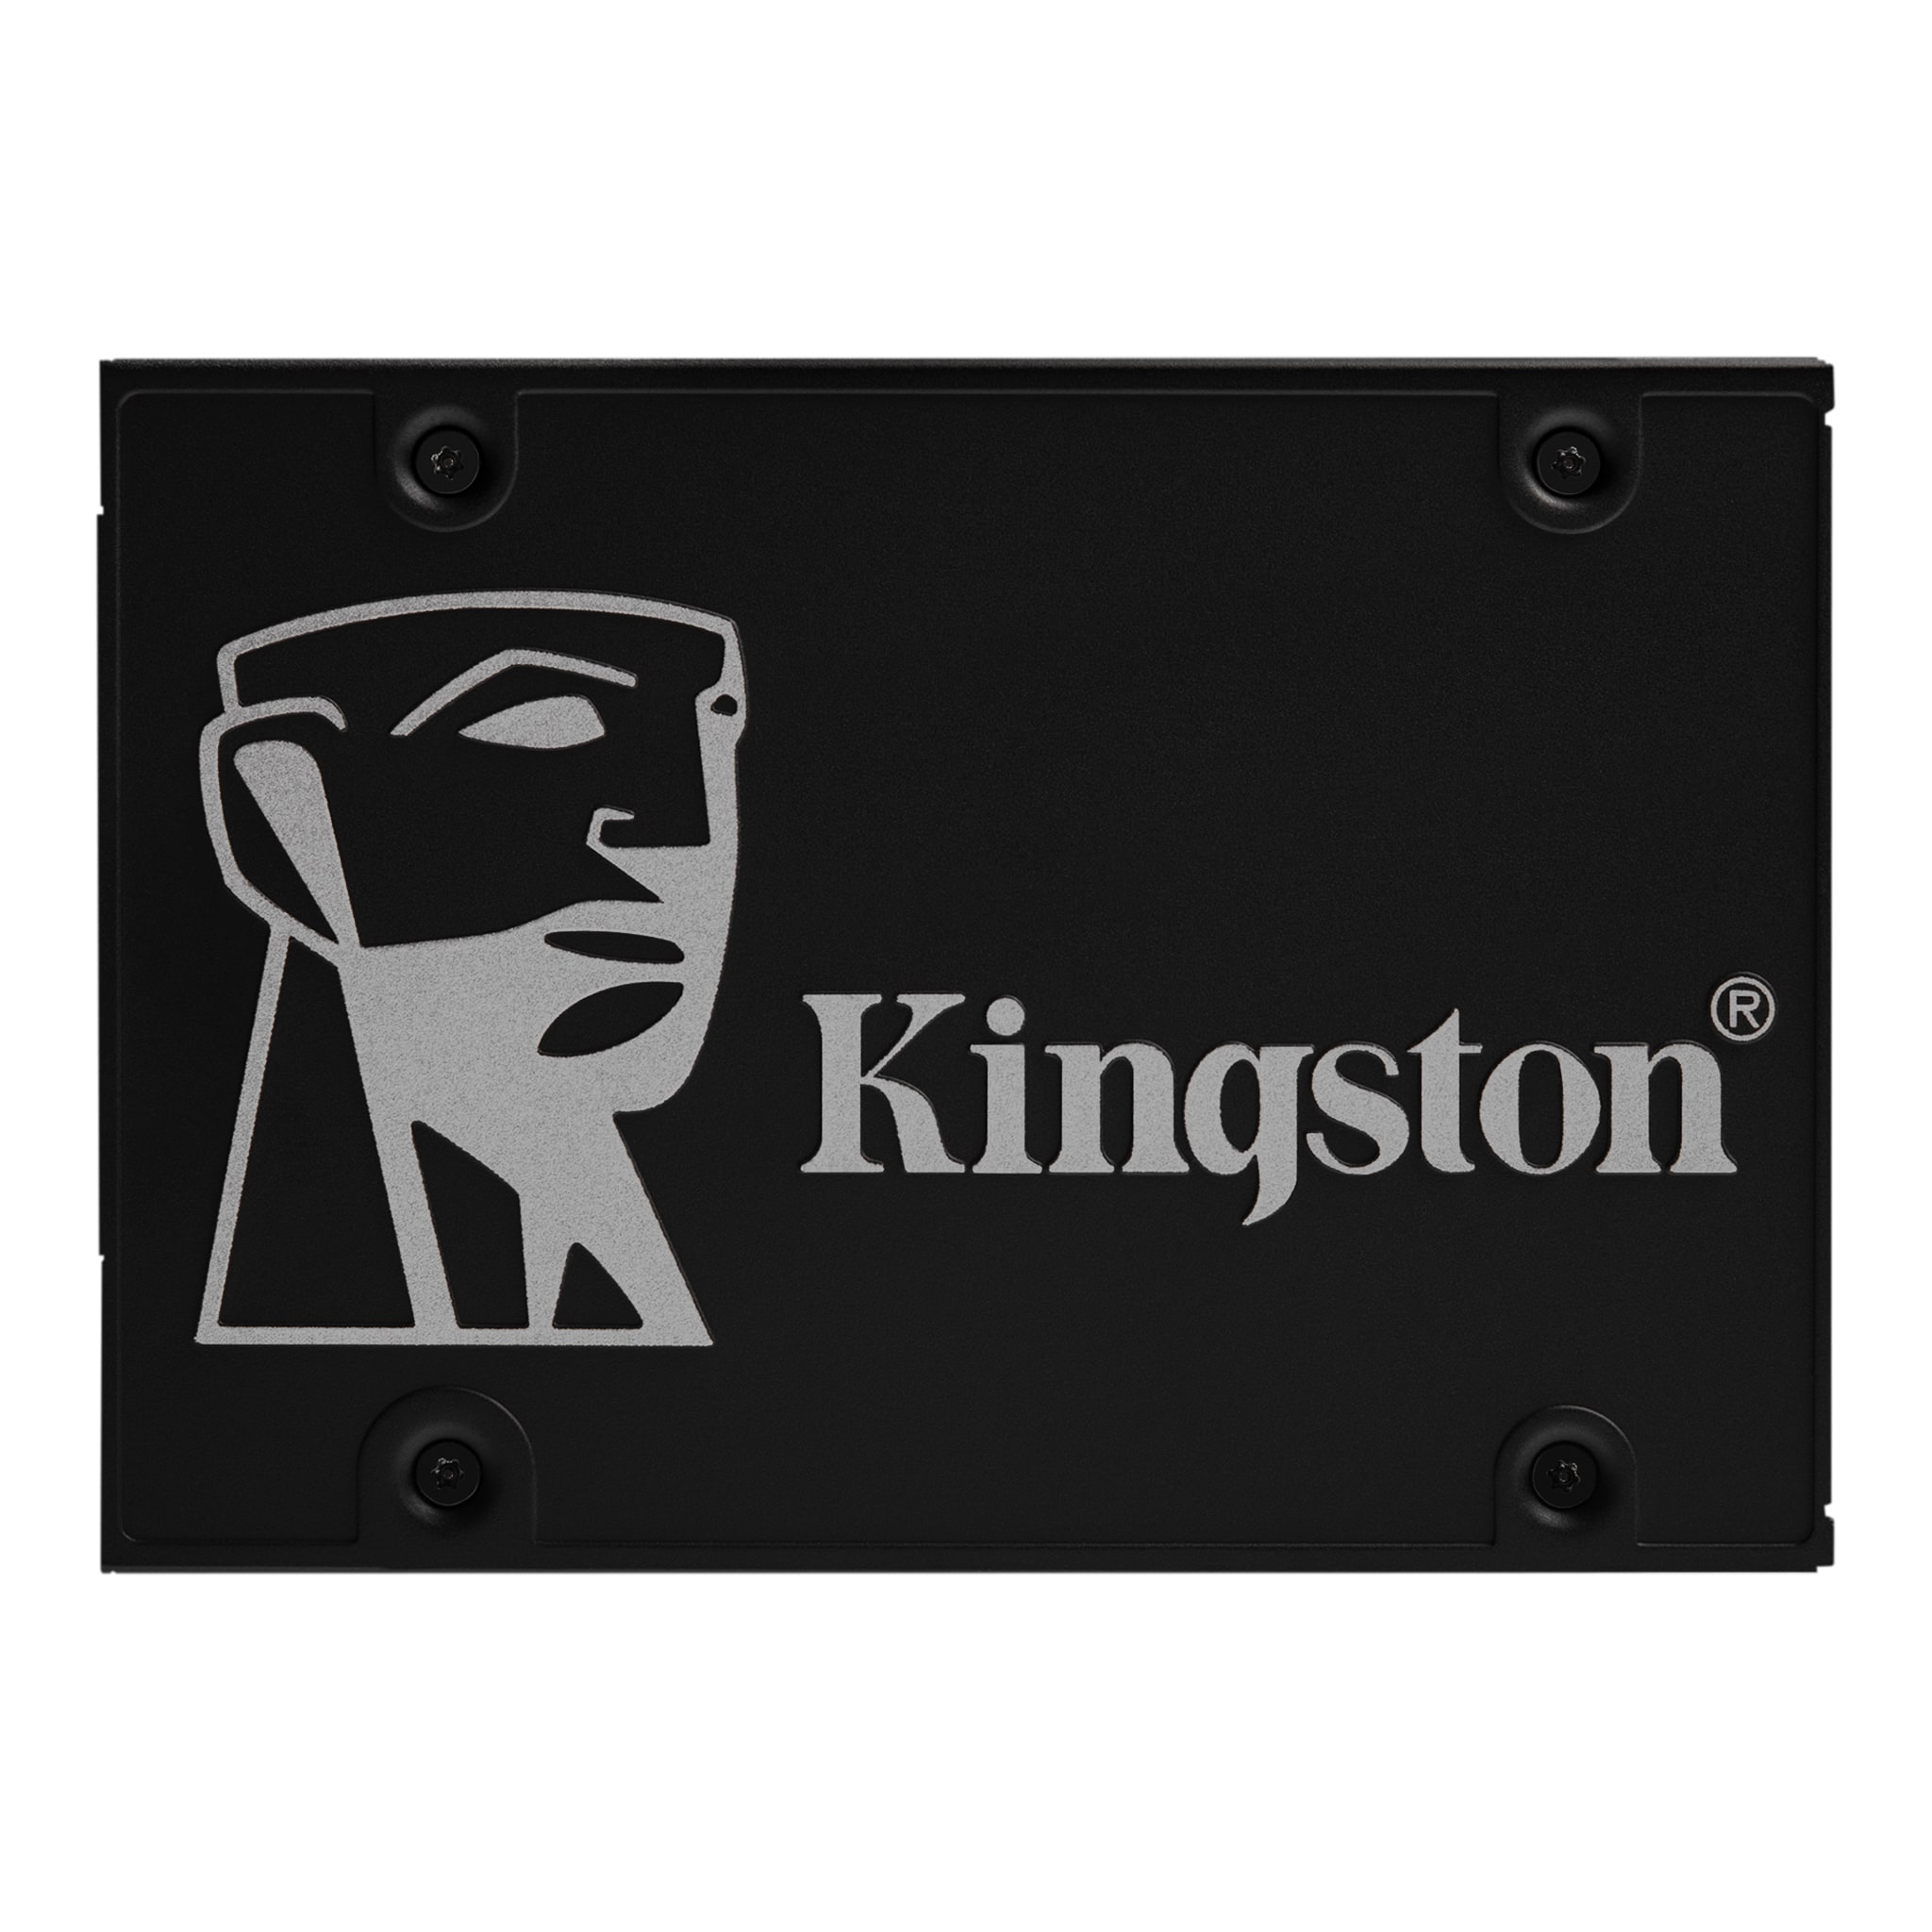 HD SSD Kingston KC600 2.5" 256GB / 550/520 MB/s / SATA3 - SKC600/256G